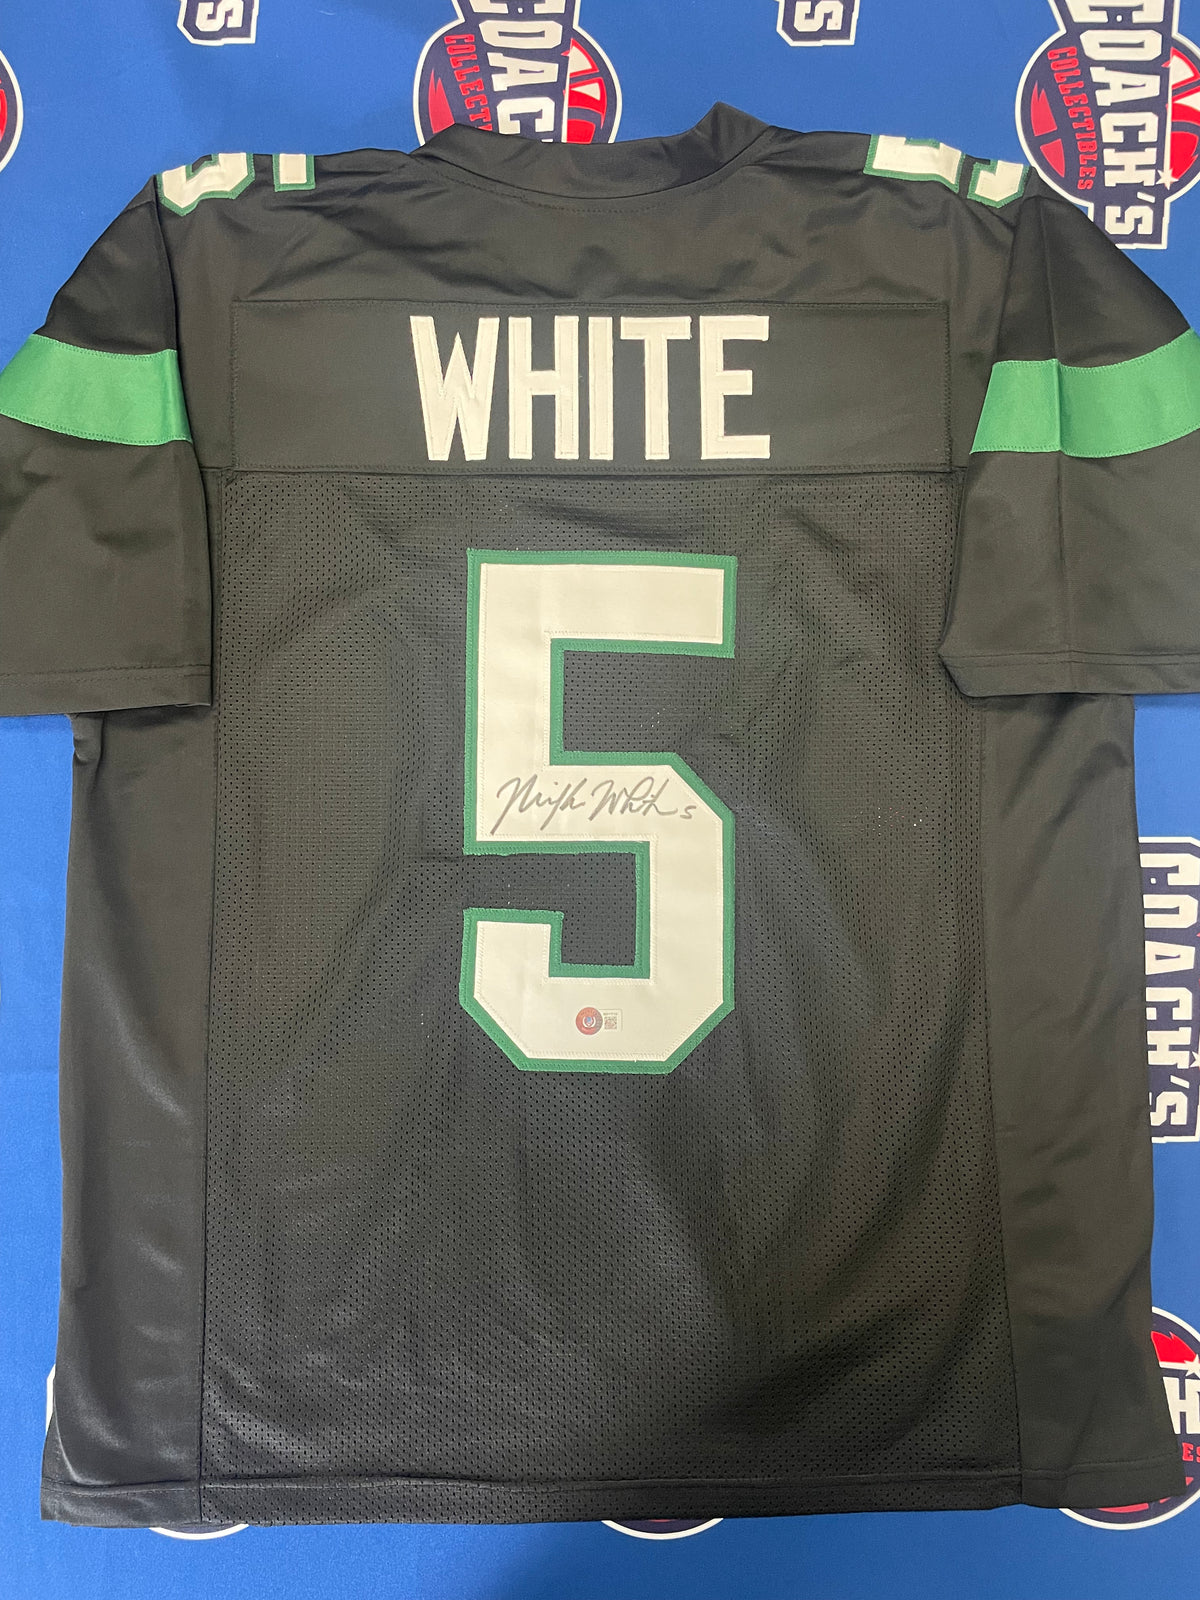 Jets wear Mike White shirts Saturday, Mighty Ducks jerseys